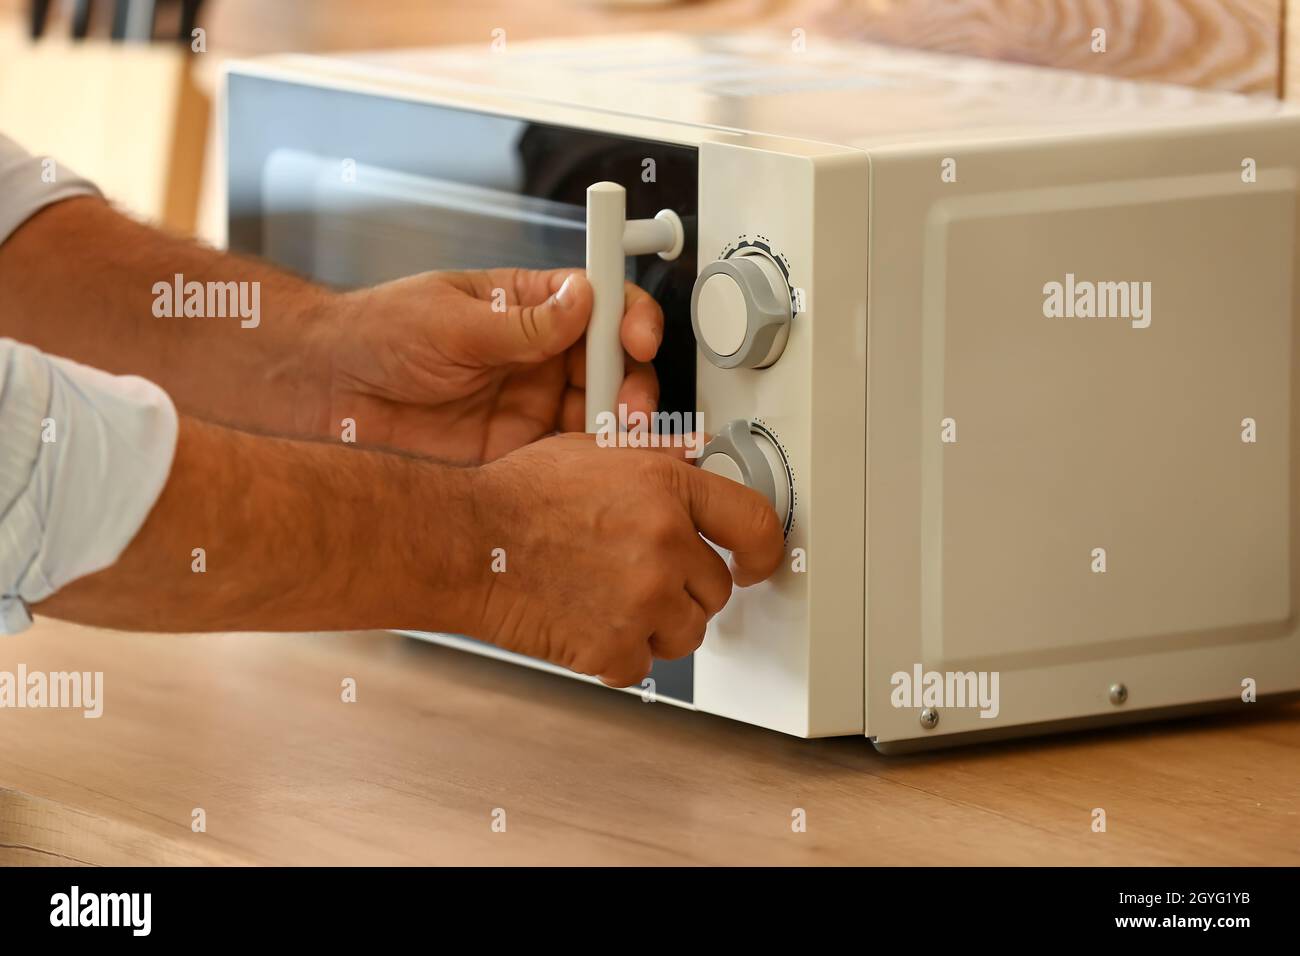 https://c8.alamy.com/comp/2GYG1YB/mature-man-heating-food-in-microwave-oven-closeup-2GYG1YB.jpg